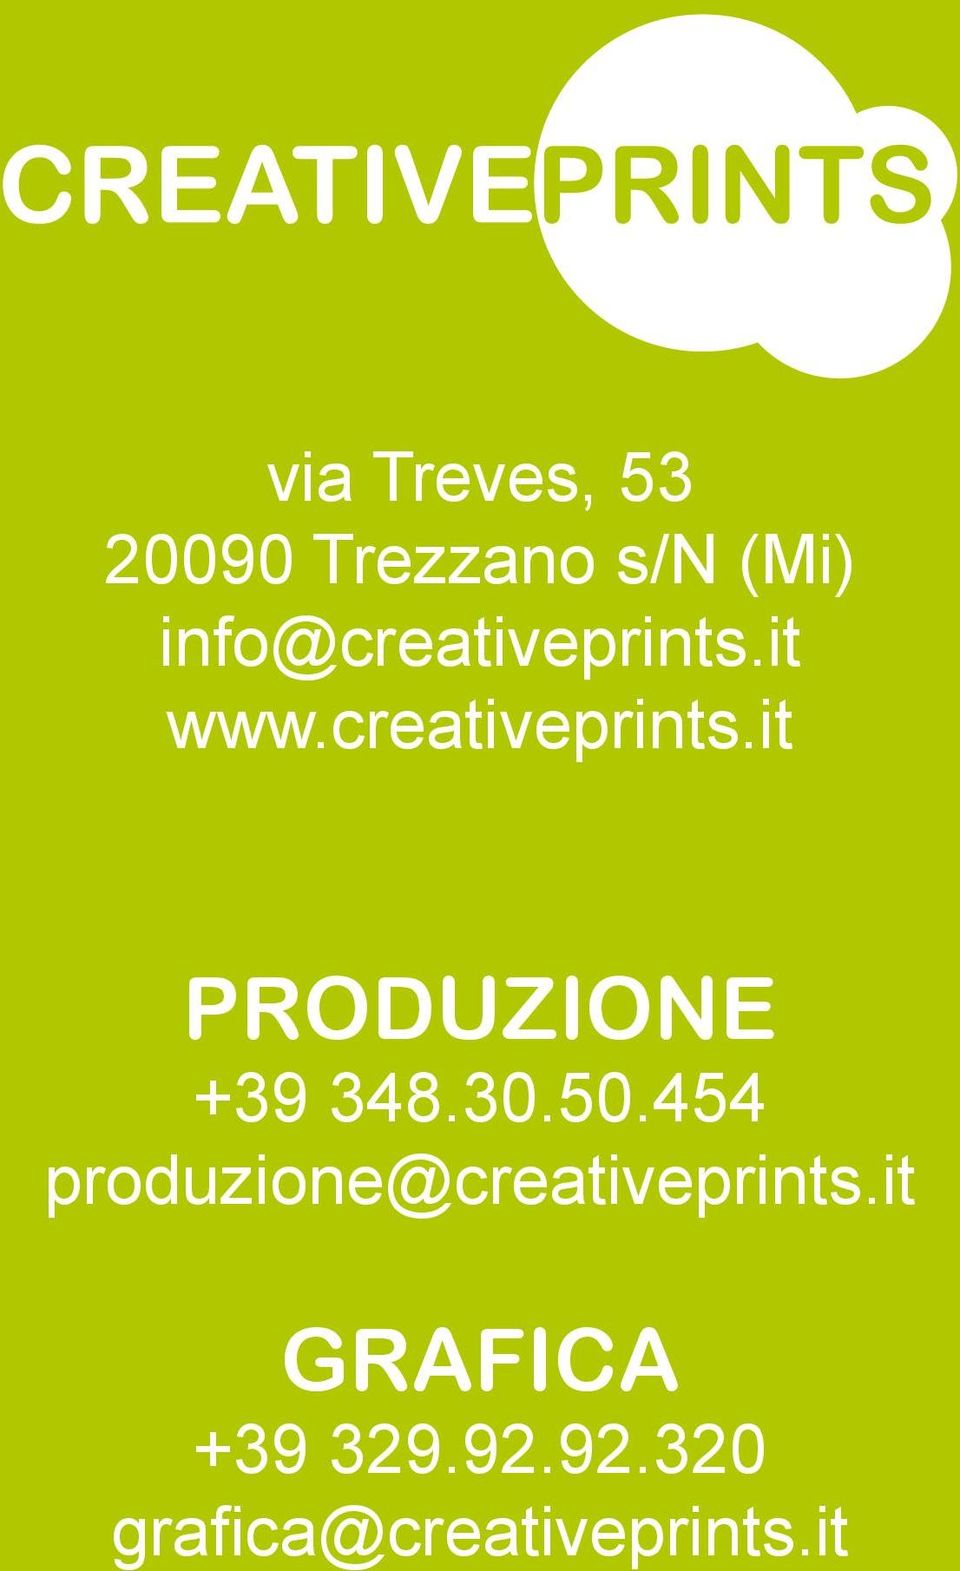 30.50.454 produzione@creativeprints.